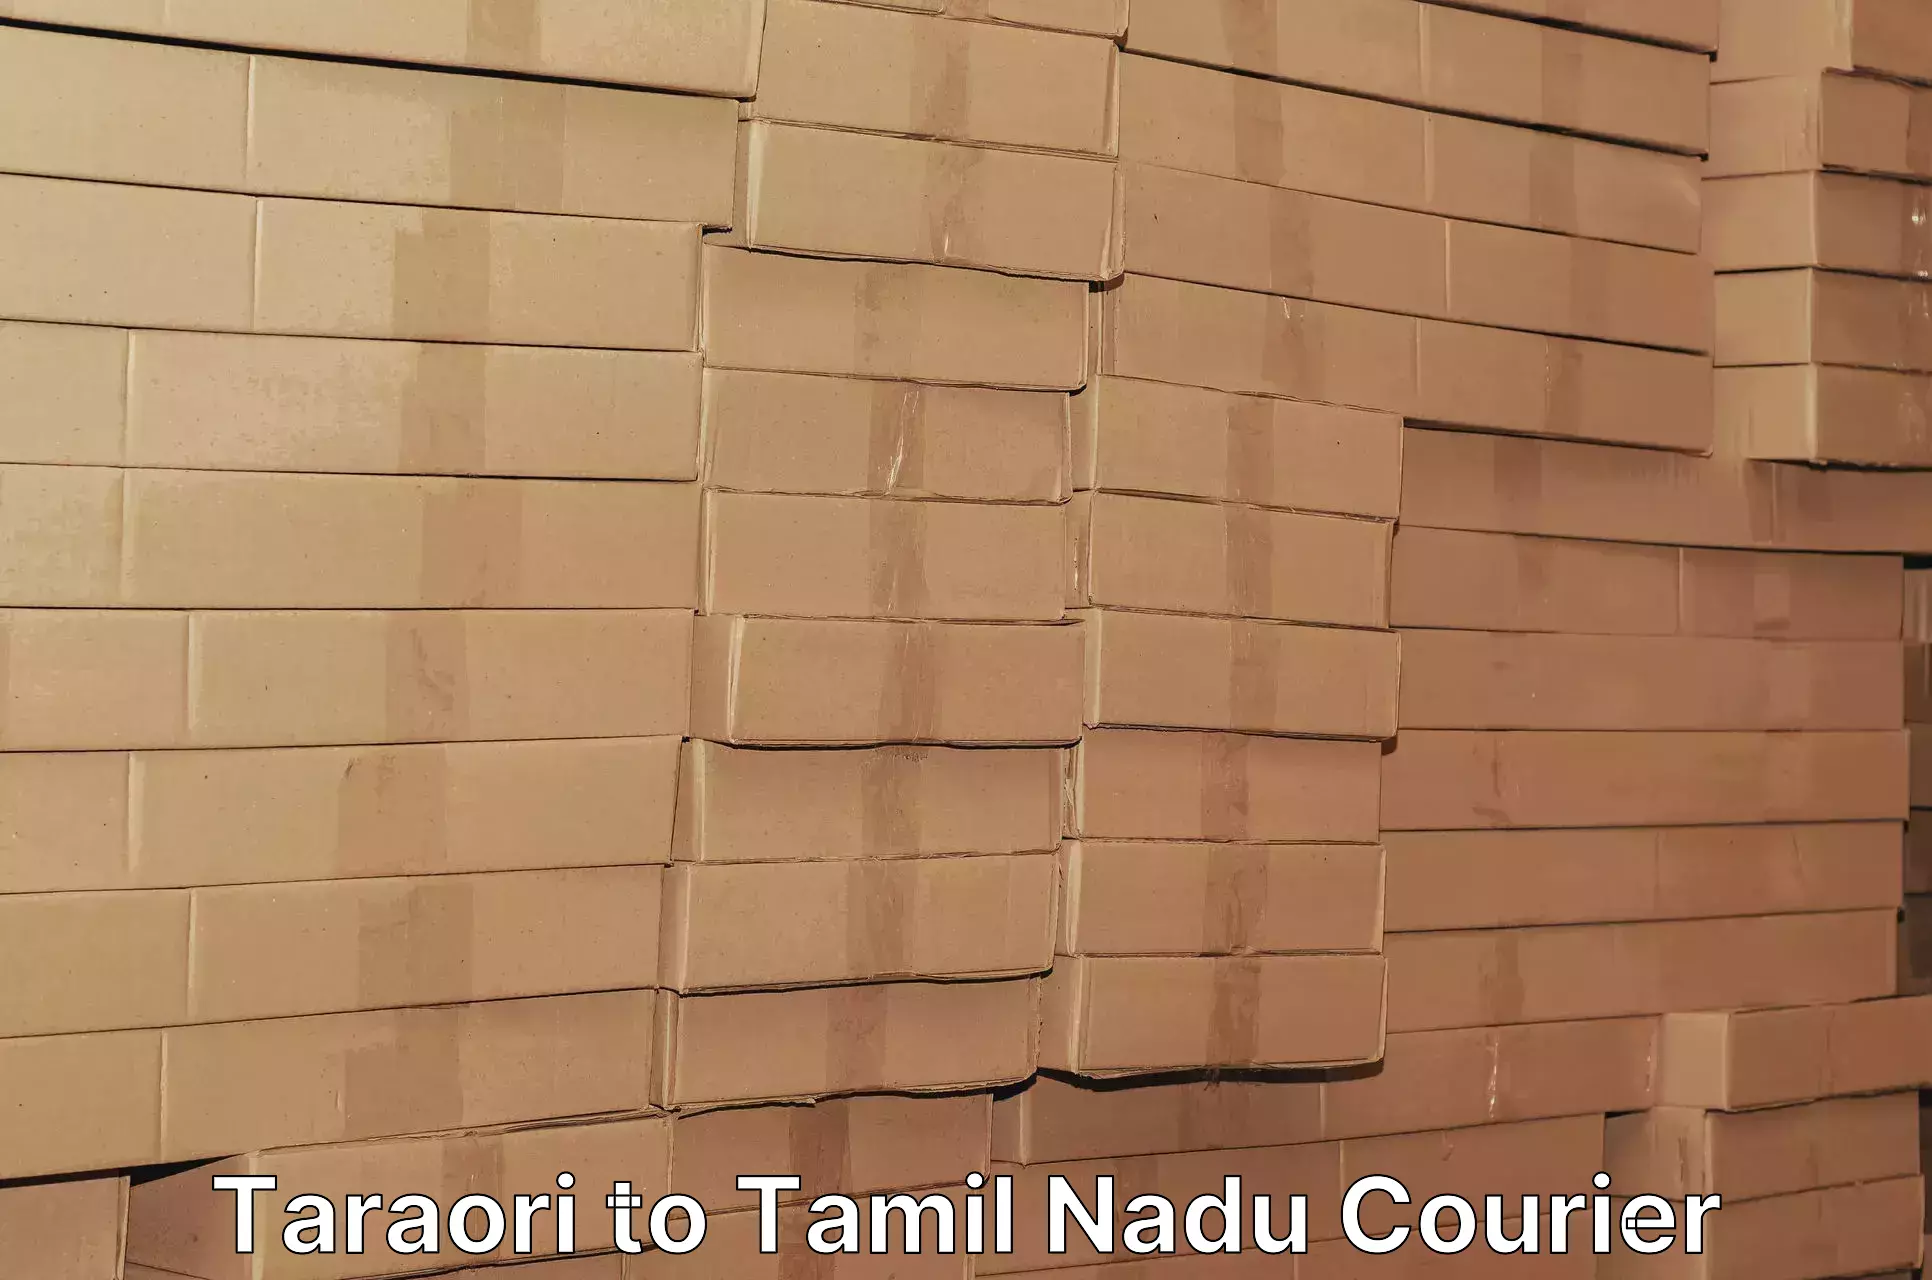 Efficient shipping operations Taraori to Coimbatore